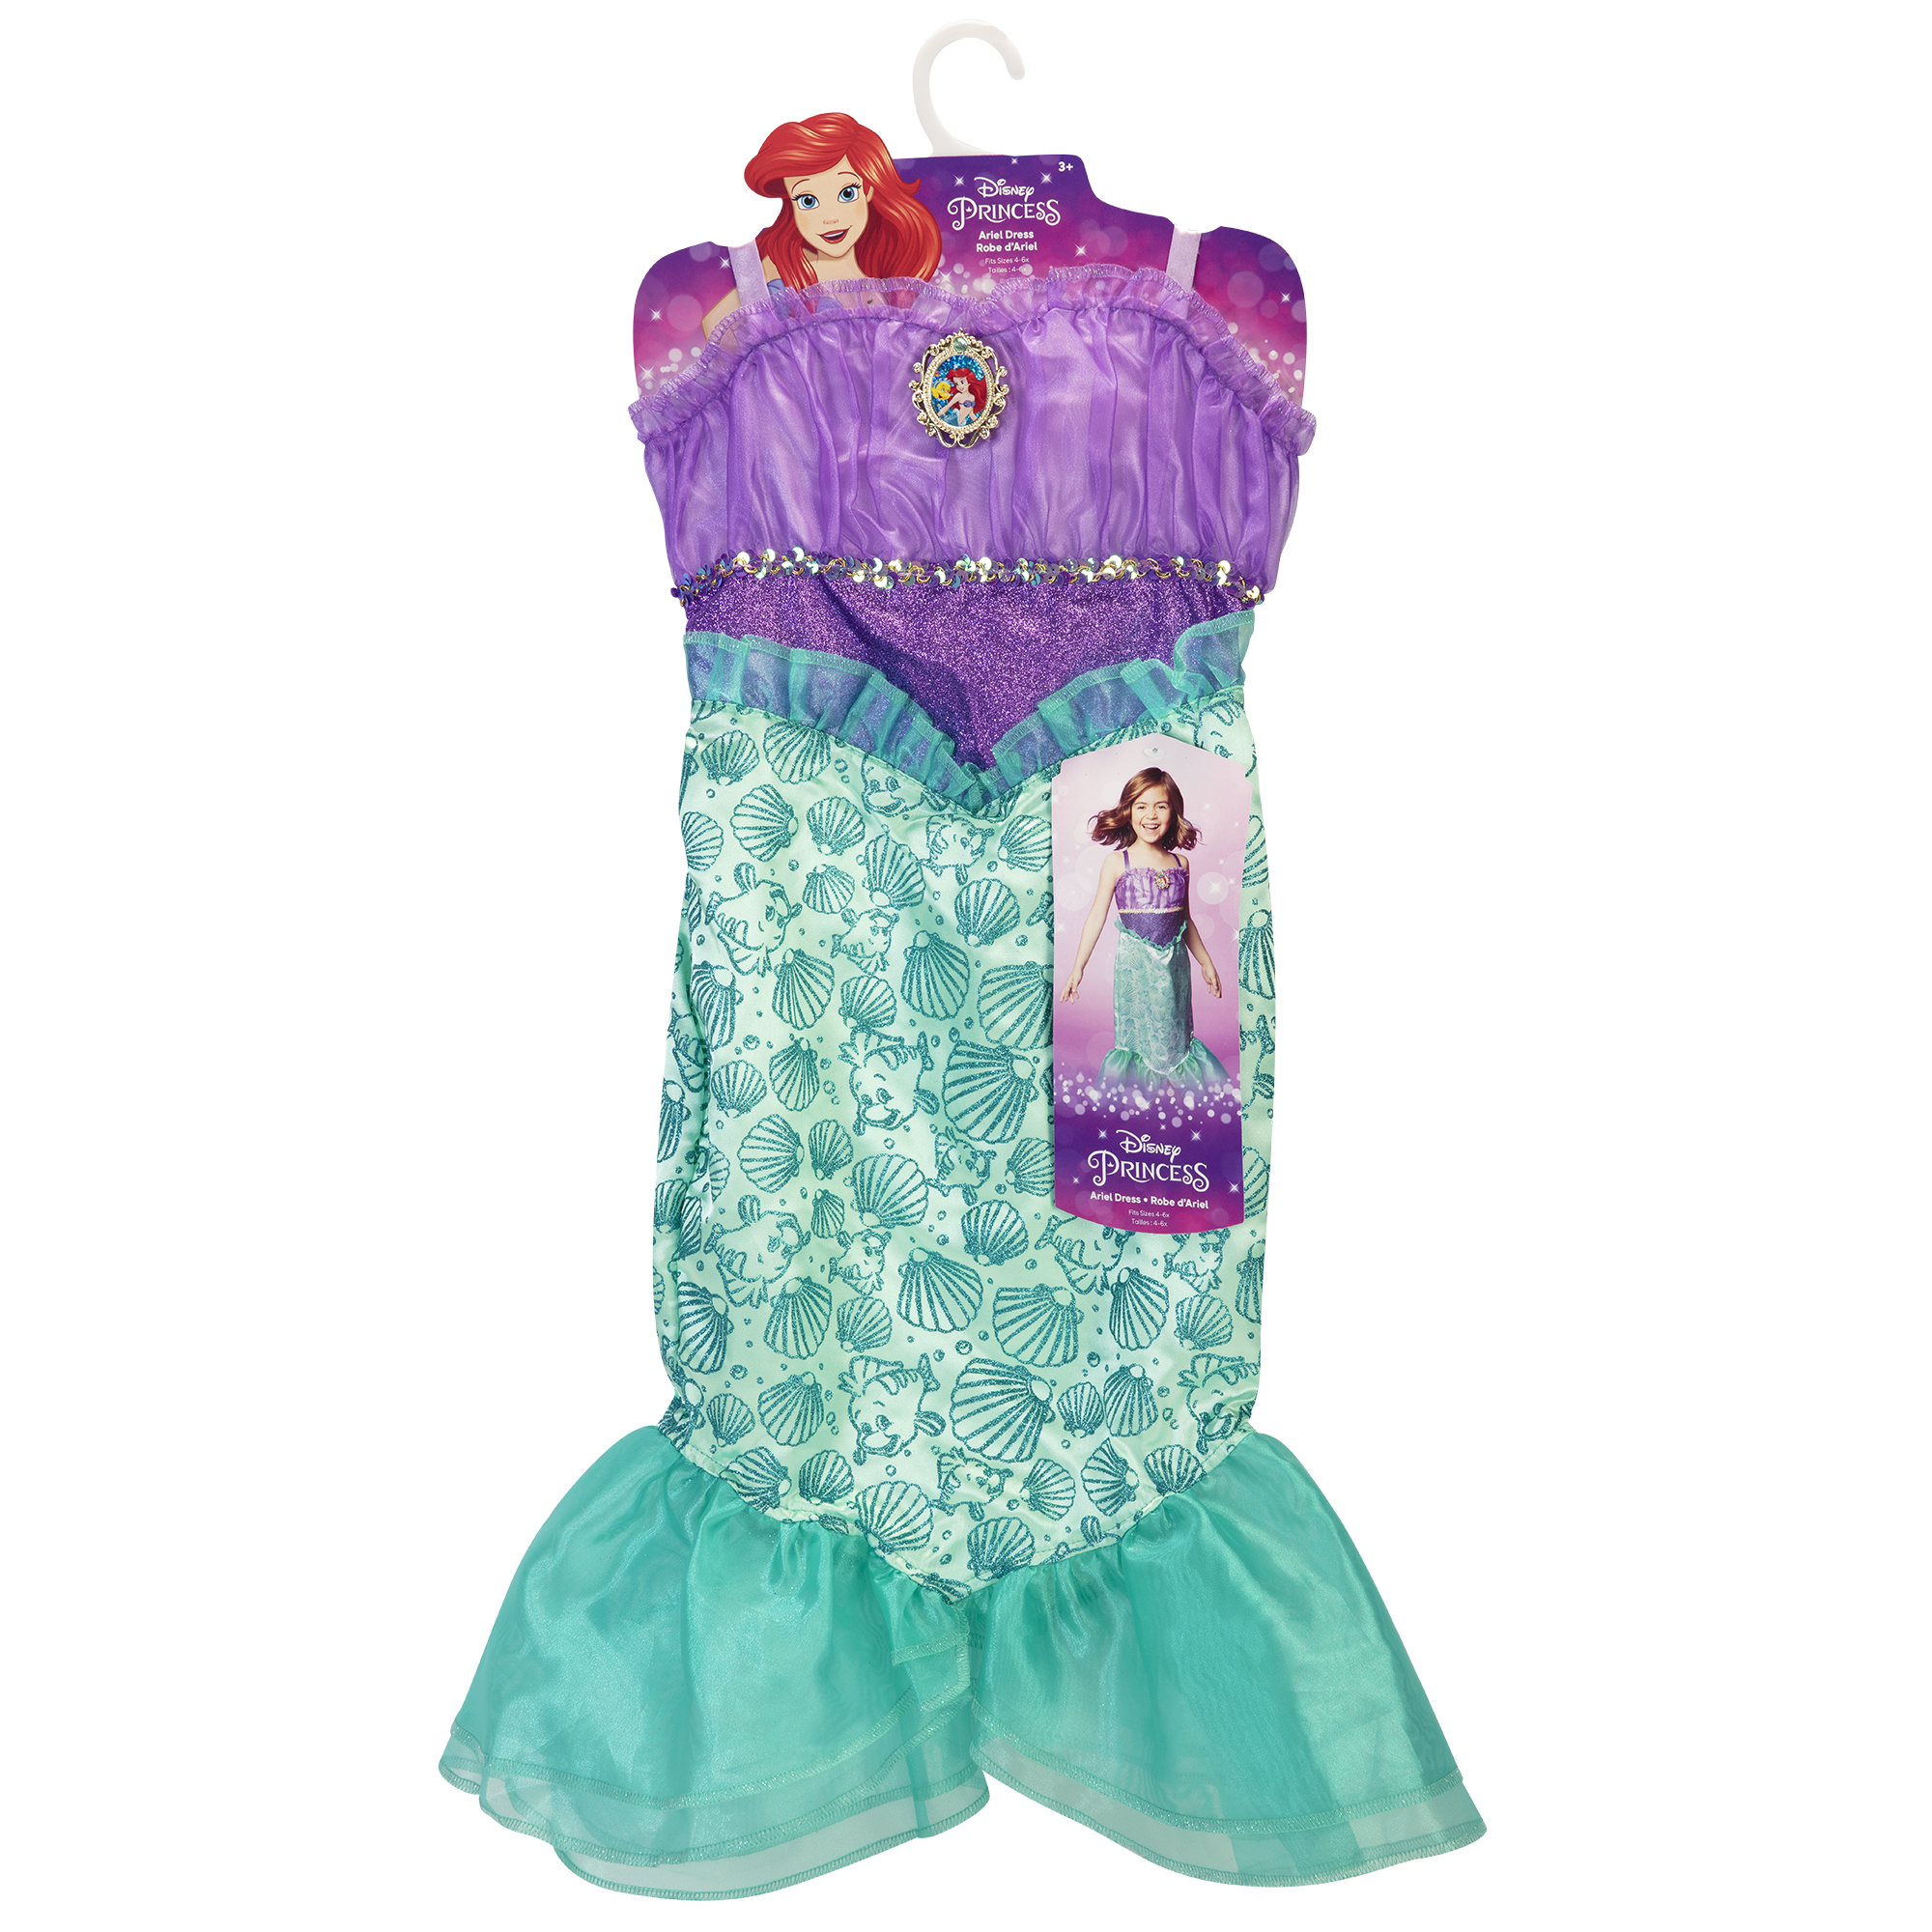 Disney Princess Ariel Children's Dress Perfect for Halloween or Dress Up - image 2 of 6